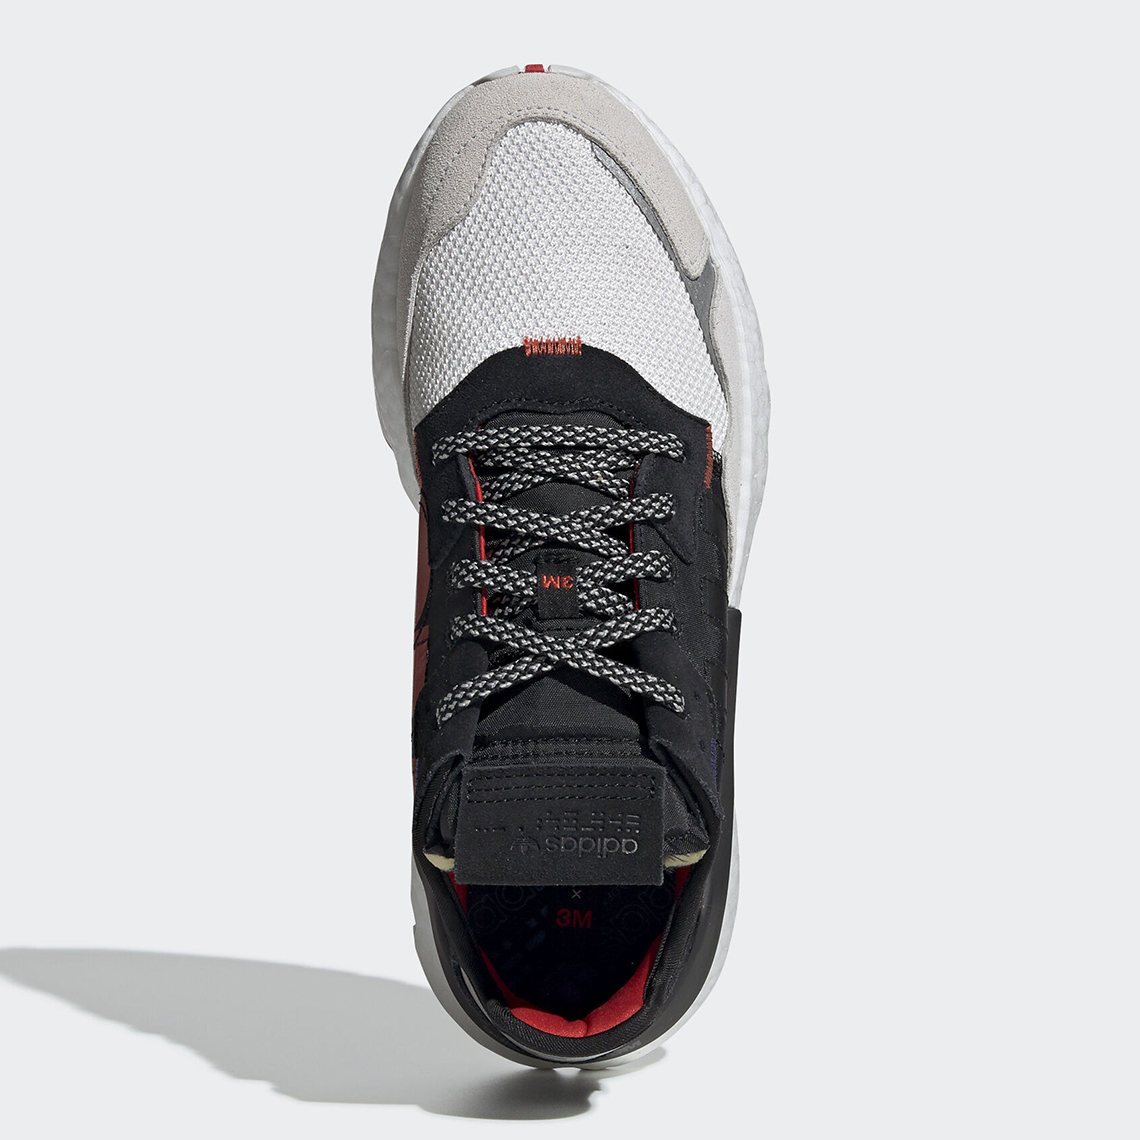 Adidas Nite Jogger 3m Reflective Ef9419 1